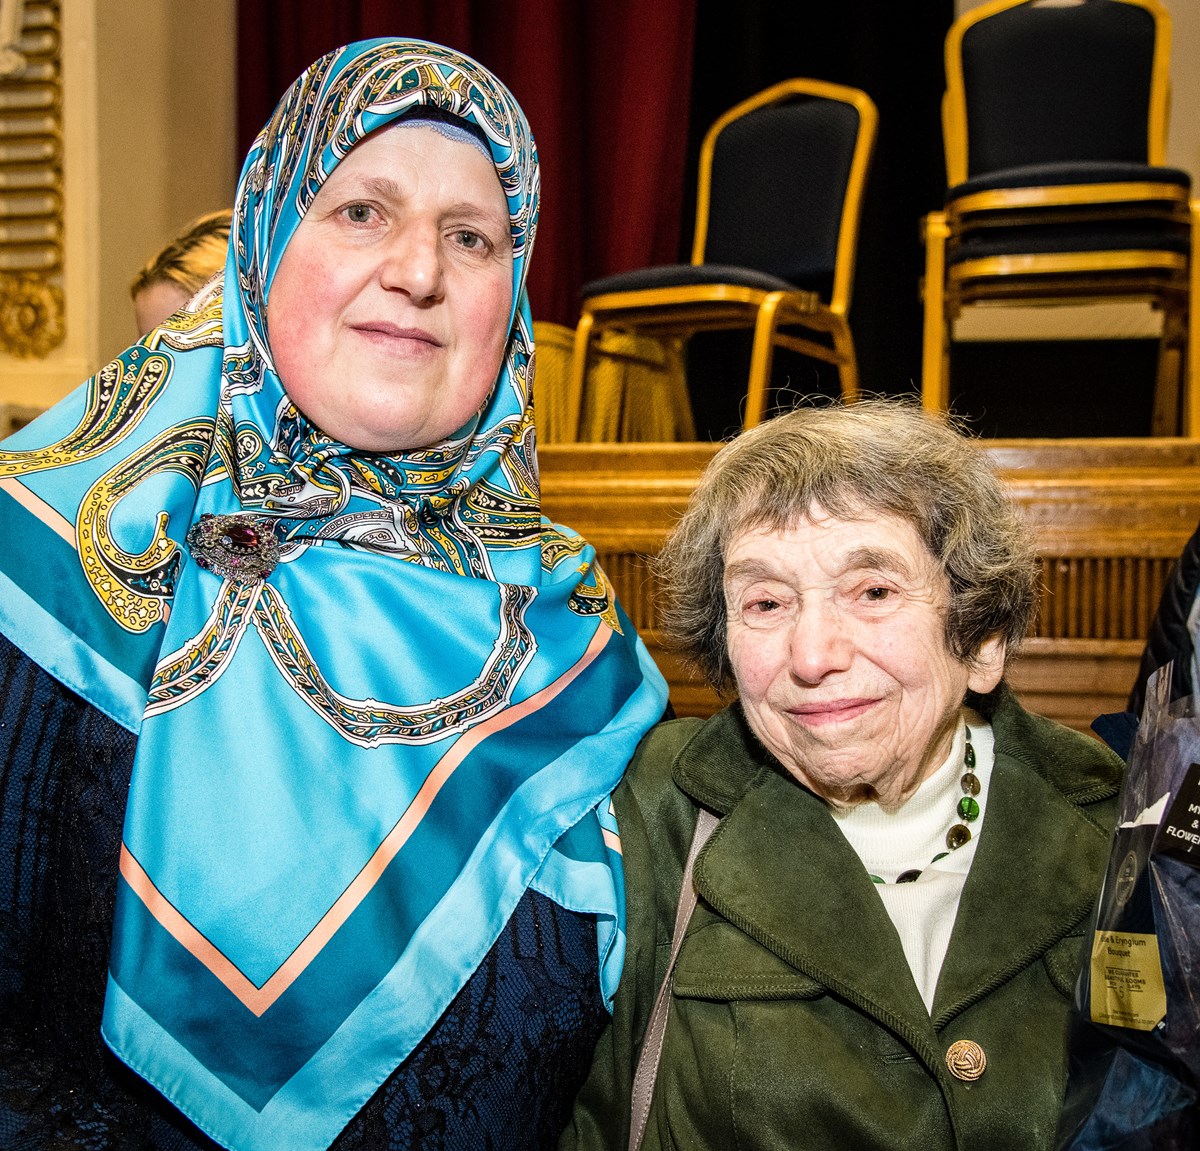 From left: Bosnian genocide survivor Mevlida Lazibi and Holocaust survivor Hana Kleiner